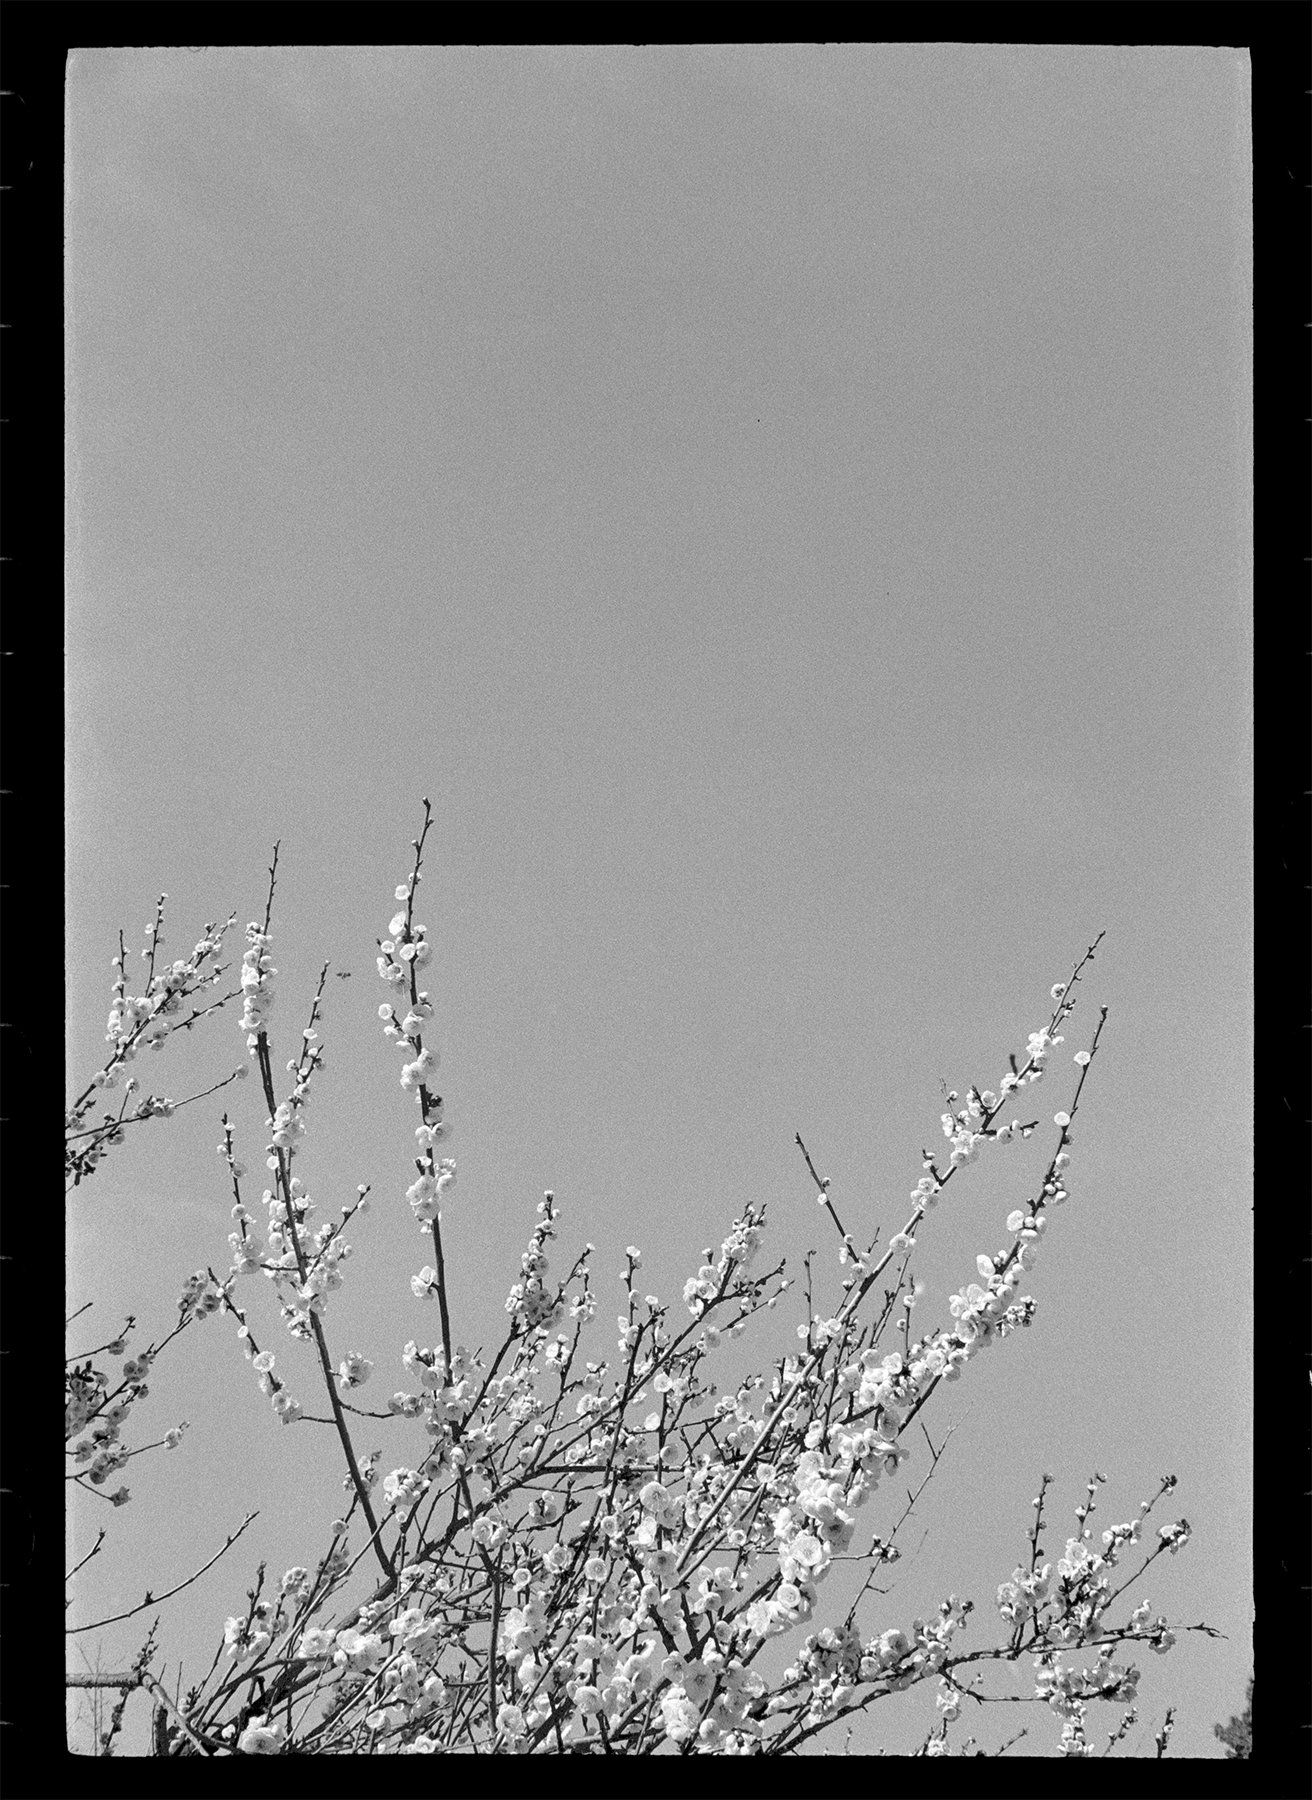 Matsubara Blooms | Minolta 35II Band Canon 35 f2.8 | Ryan Steven Green